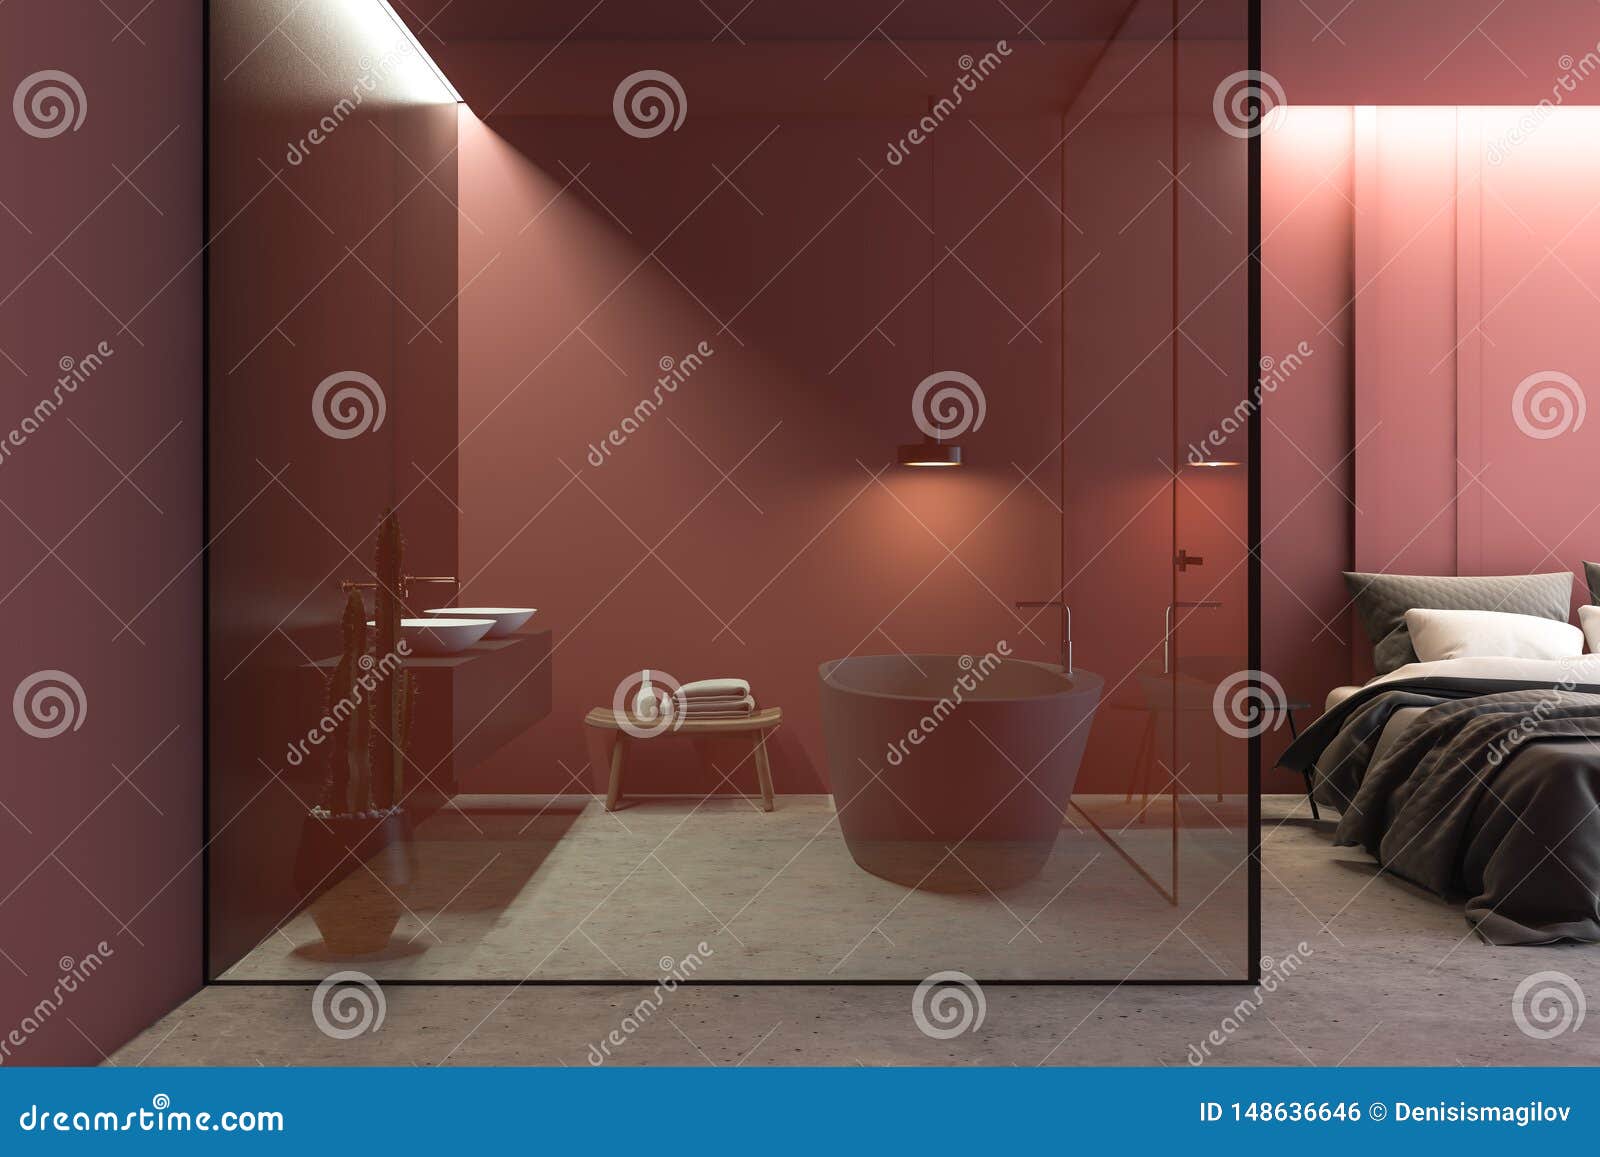 Interior Of Bathroom In Red Master Bedroom Stock